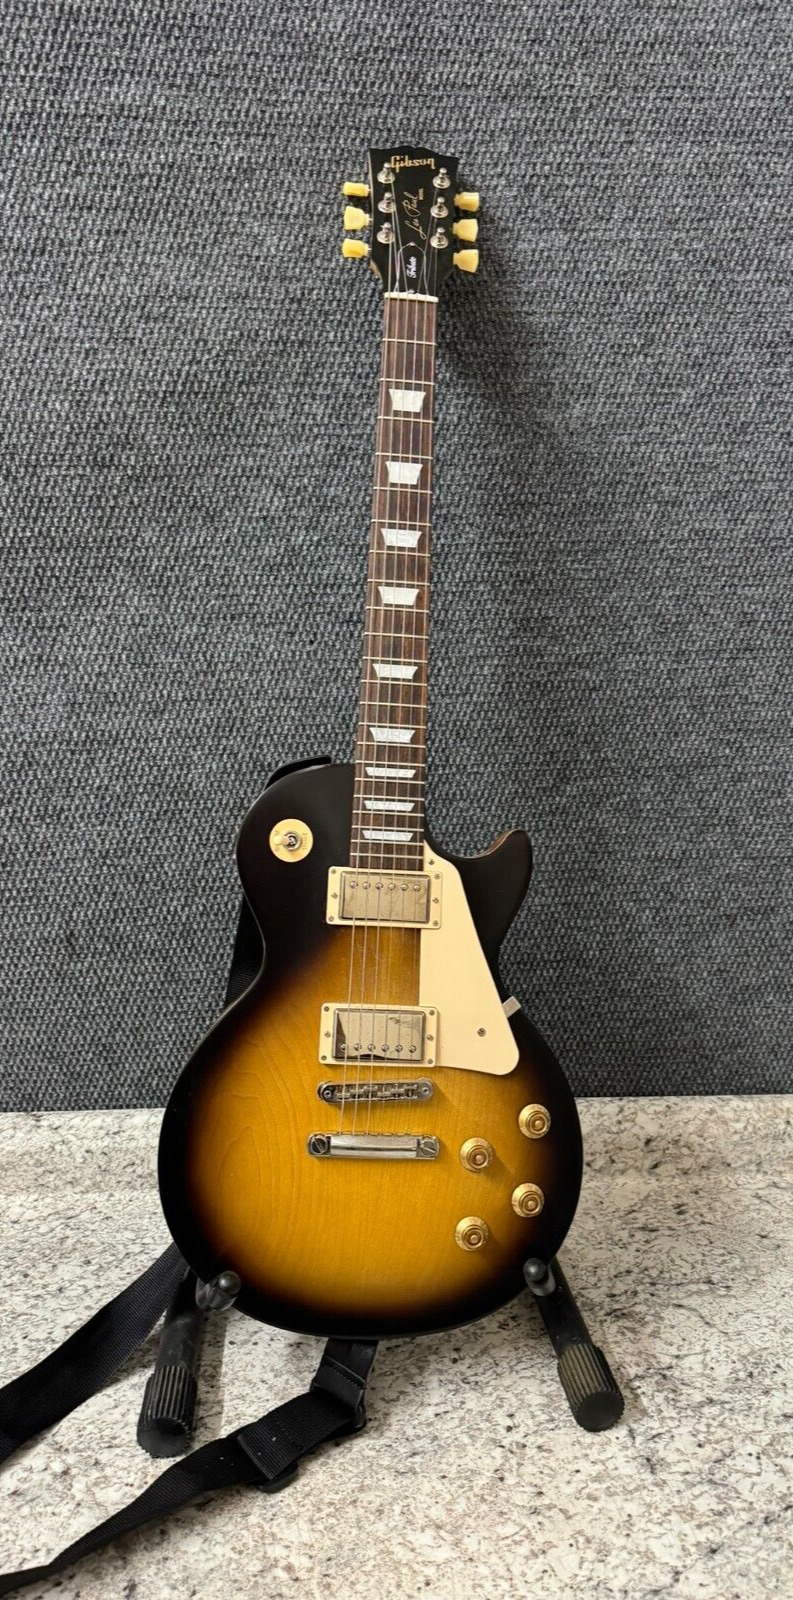 2022 Gibson Les Paul Tribute 6 string Electric Guitar - Satin Tobacco Burst RH